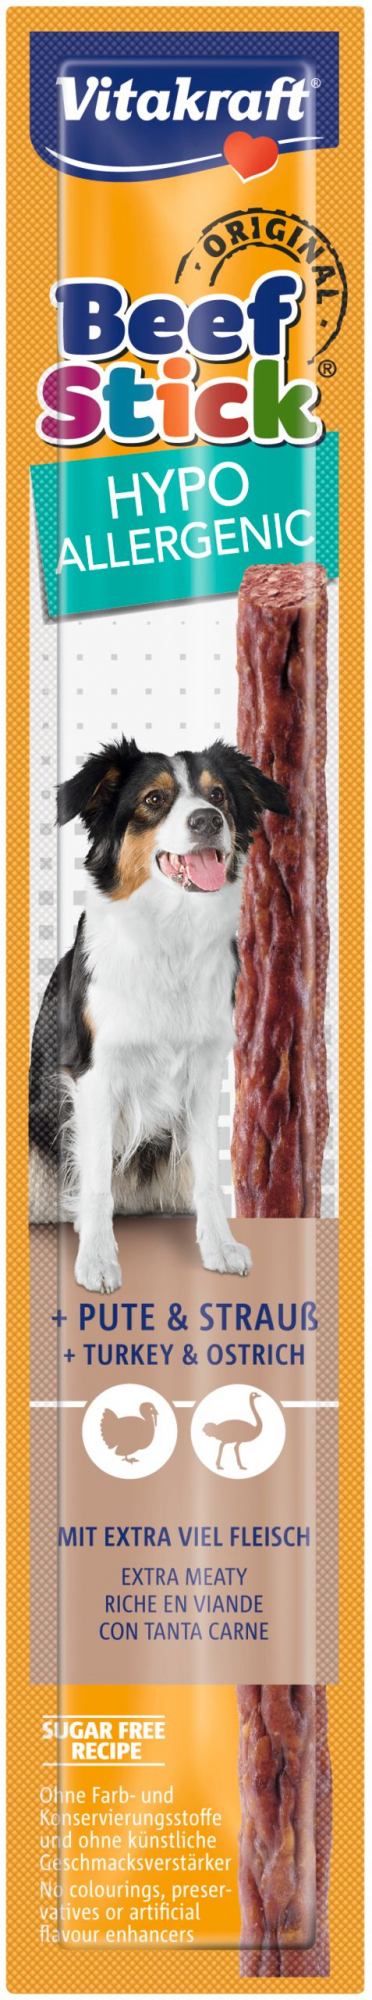 Vitakraft Beef Stick Ippoallergenico per cani